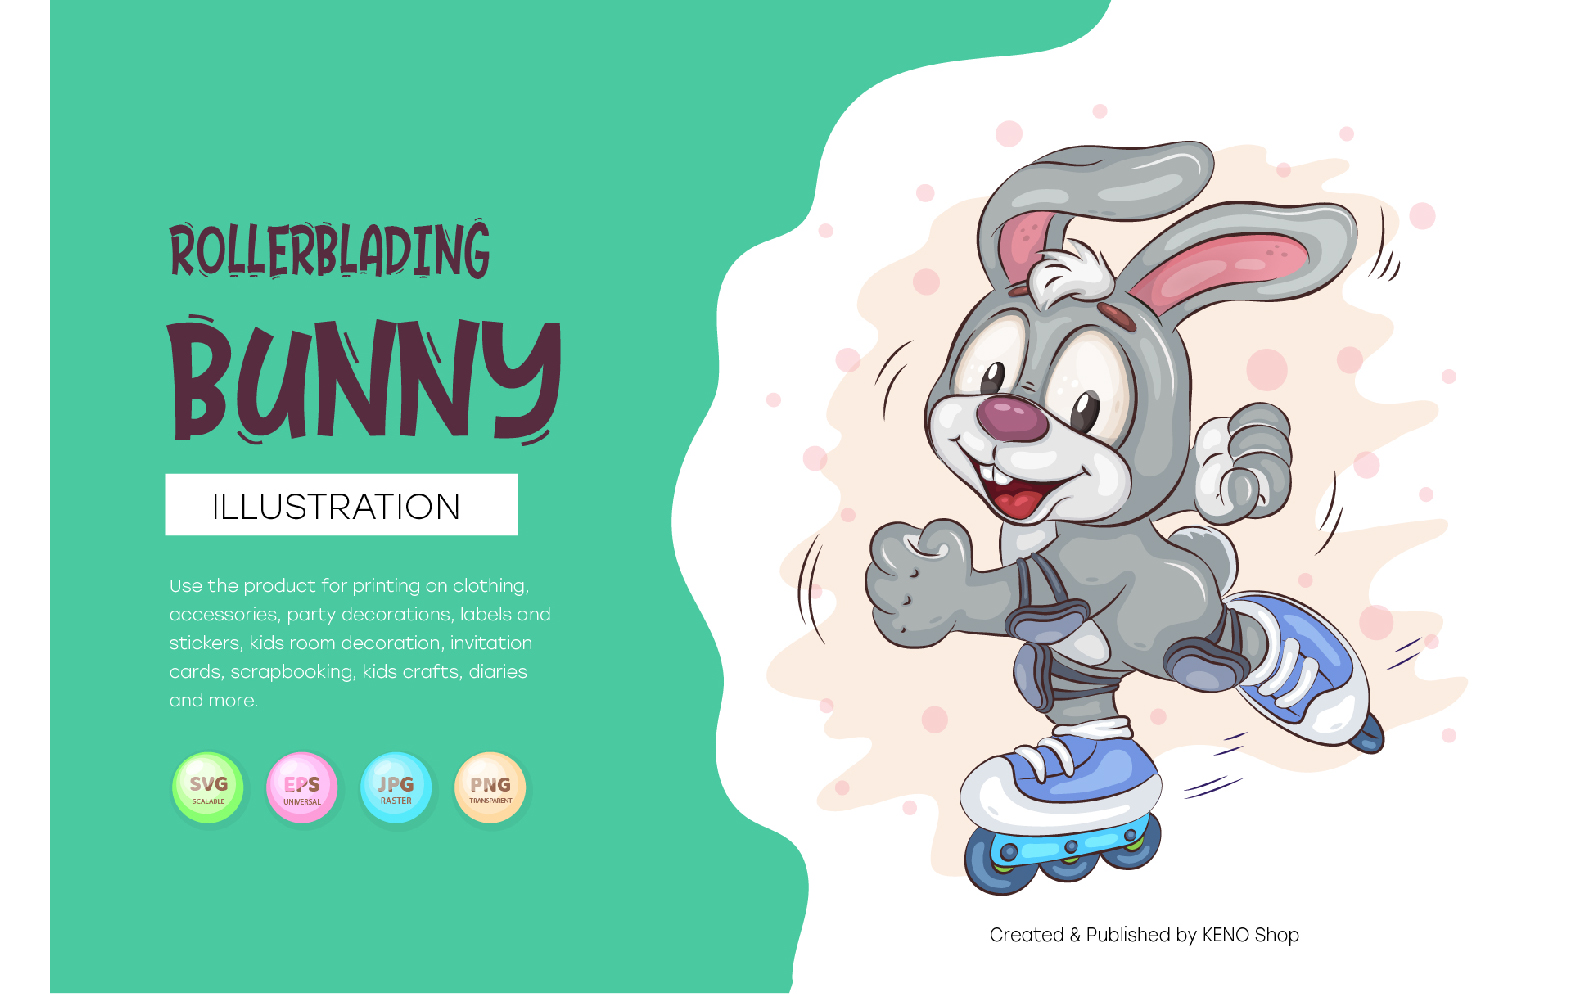 Cartoon Bunny Rollerblading. T-Shirt, PNG, SVG.